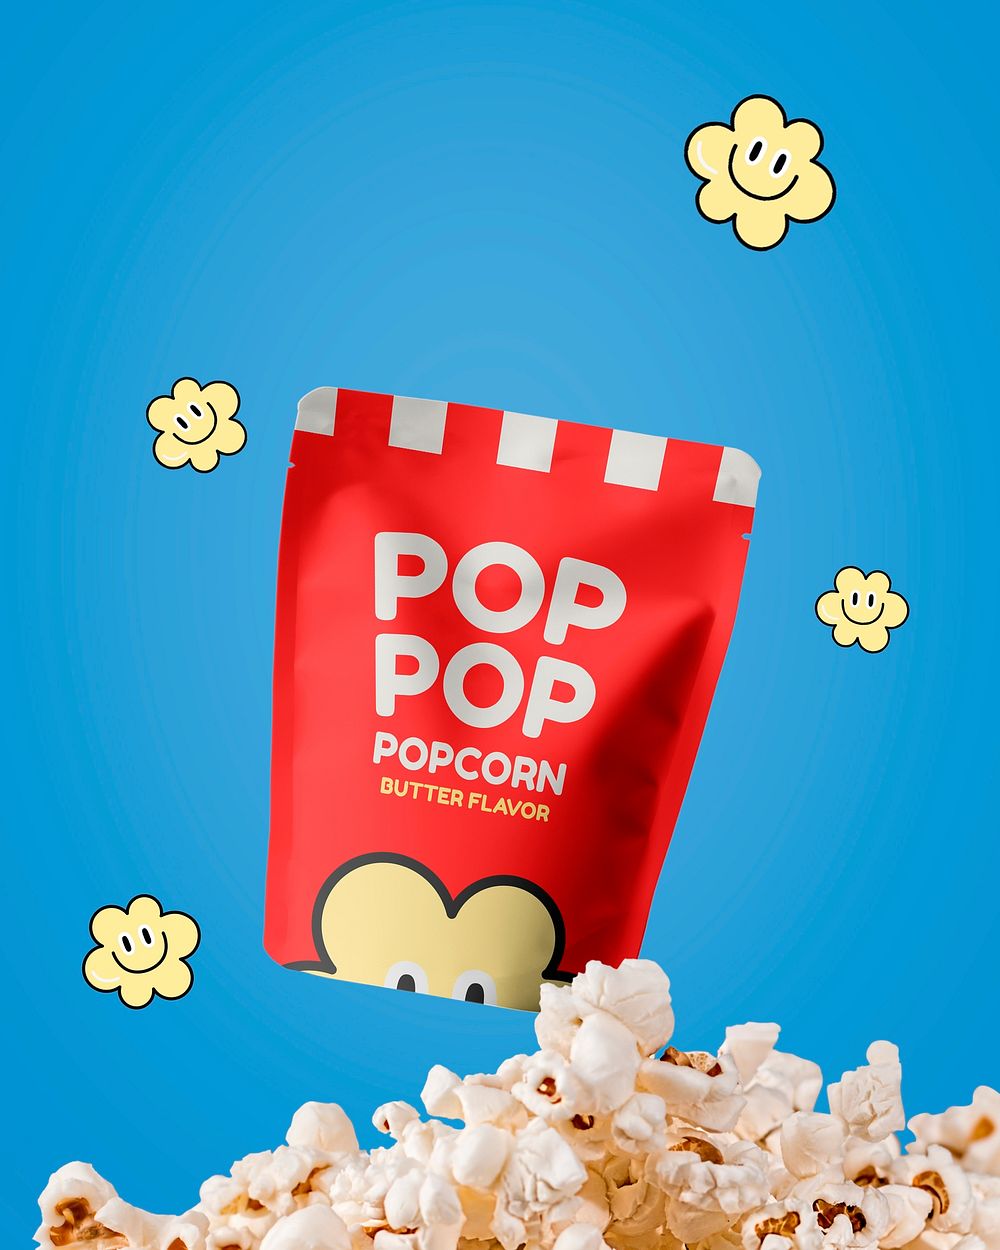 Cute popcorn sachet, food packaging design